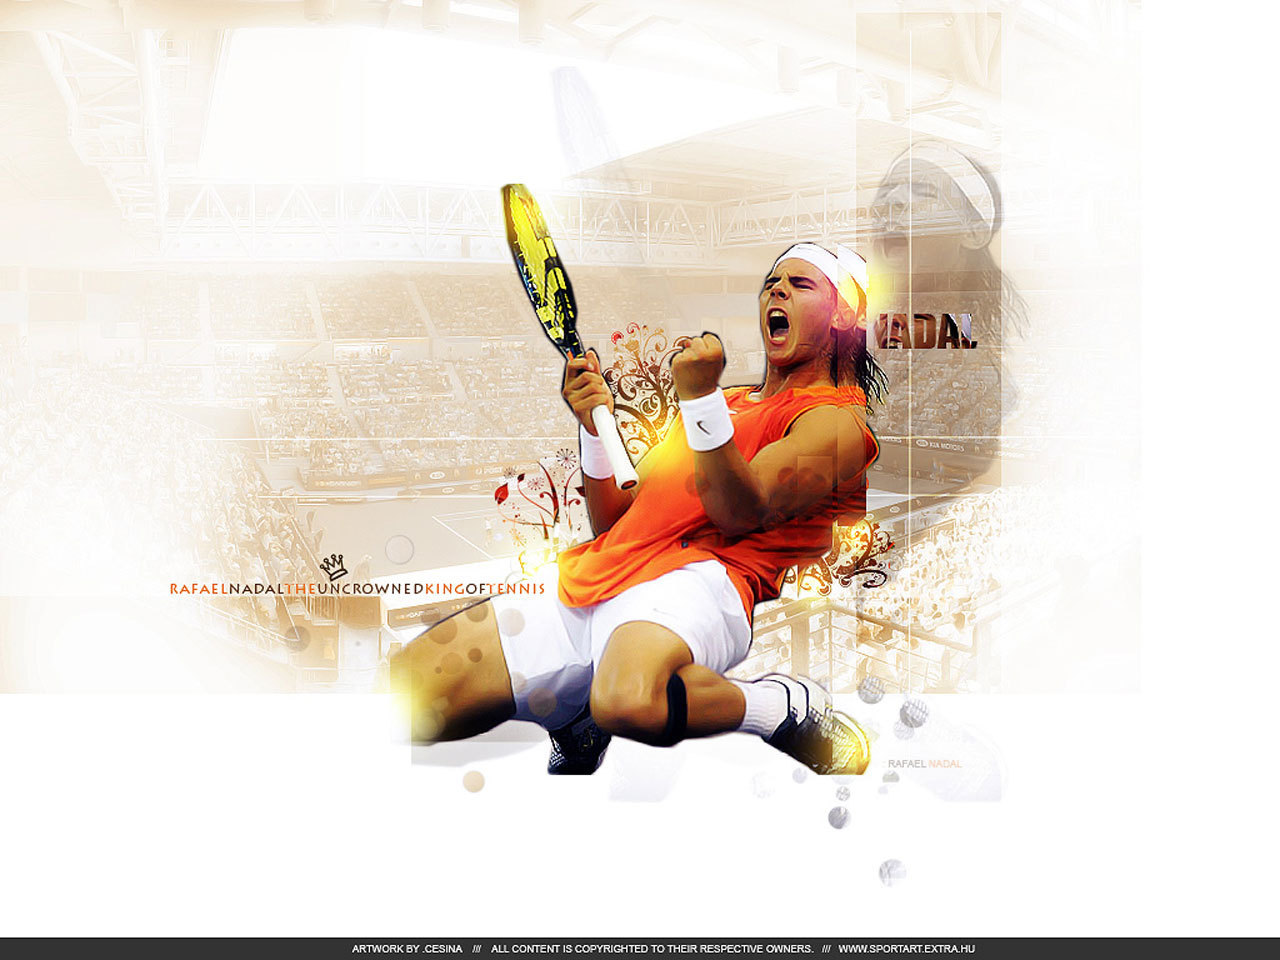 Rafael Nadal Wallpaper - Tennis Wallpaper (7220793) - Fanpop1280 x 960